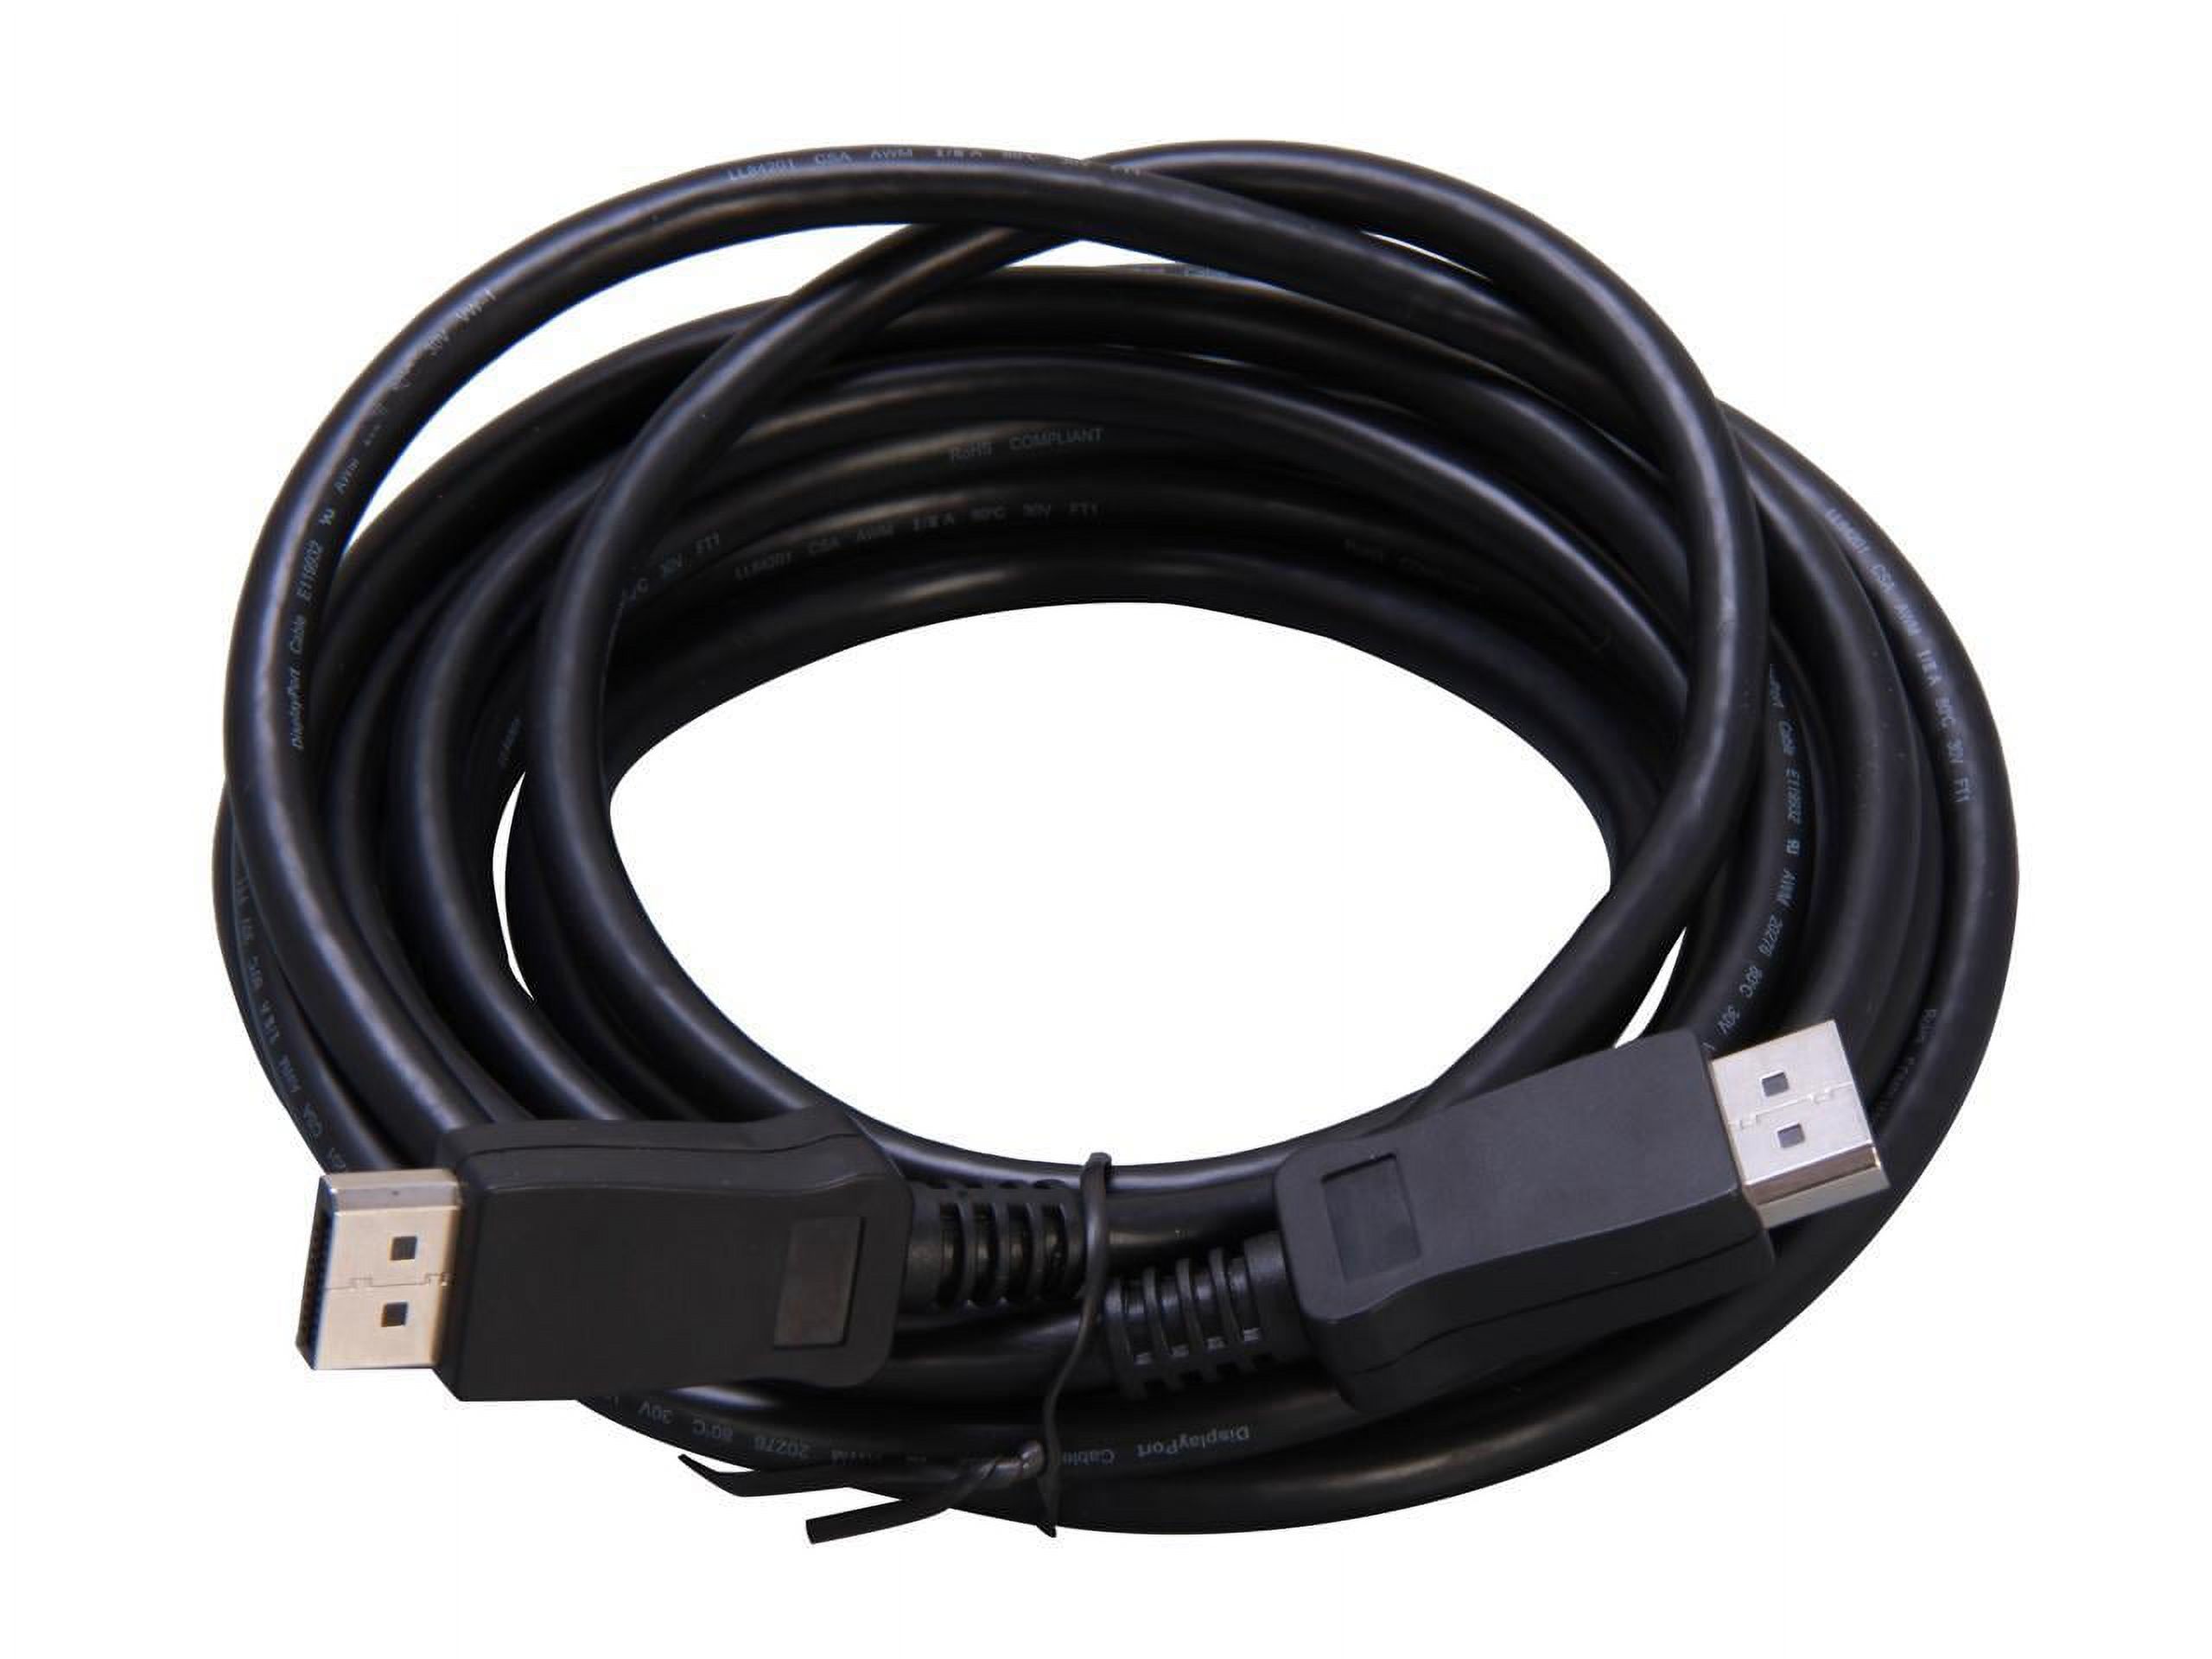 StarTech.com DISPLPORT15L DisplayPort Cable - 15 ft. - with Latches - 4K DisplayPort to DisplayPort Cable - DP Cable - DisplayPort 1.2 Cable - image 2 of 3